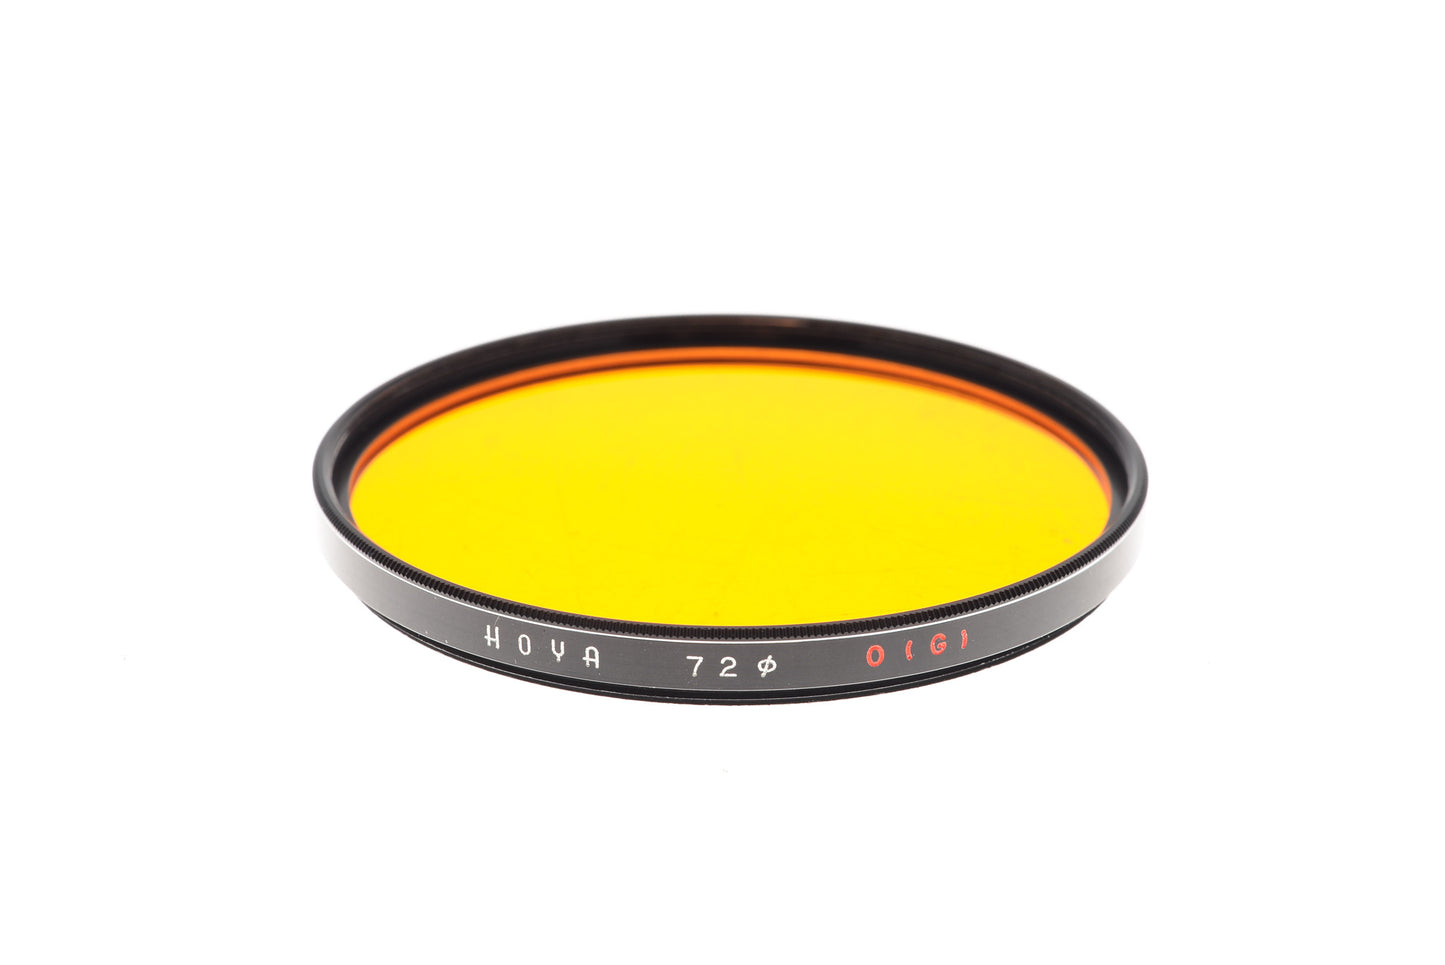 Hoya 72mm Orange Filter G - Accessory